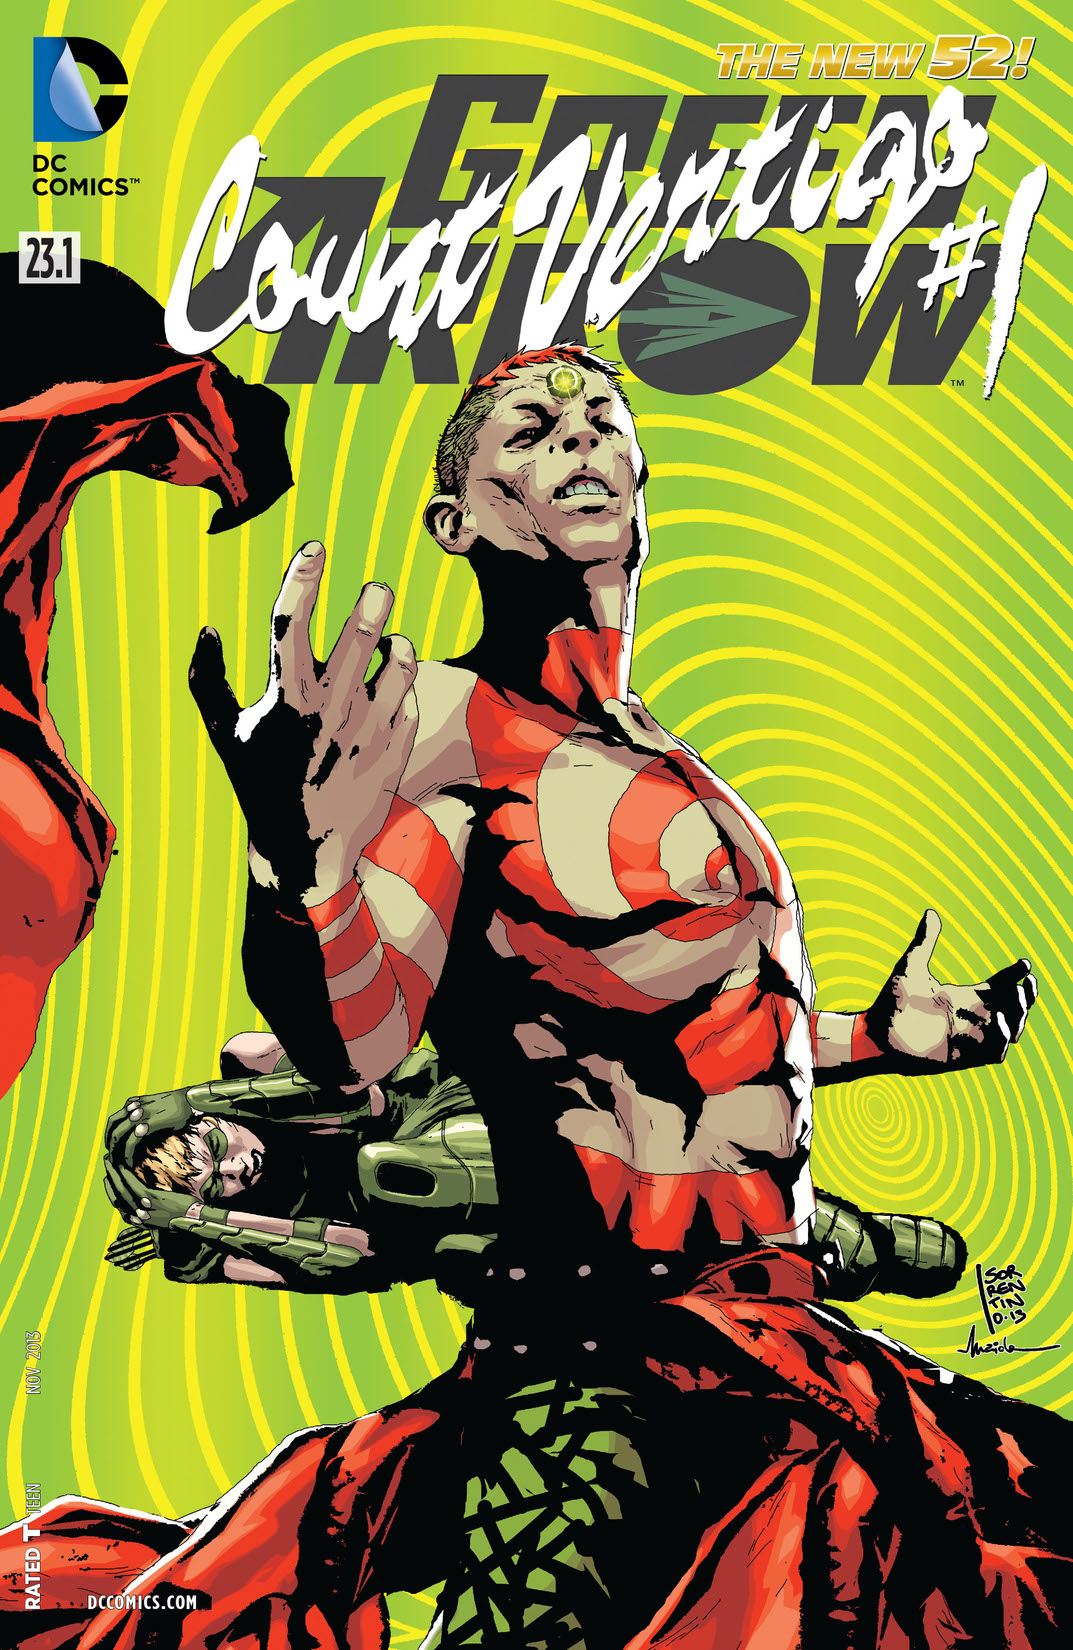 Green Arrow feat Count Vertigo (2013-) #23.1 preview images